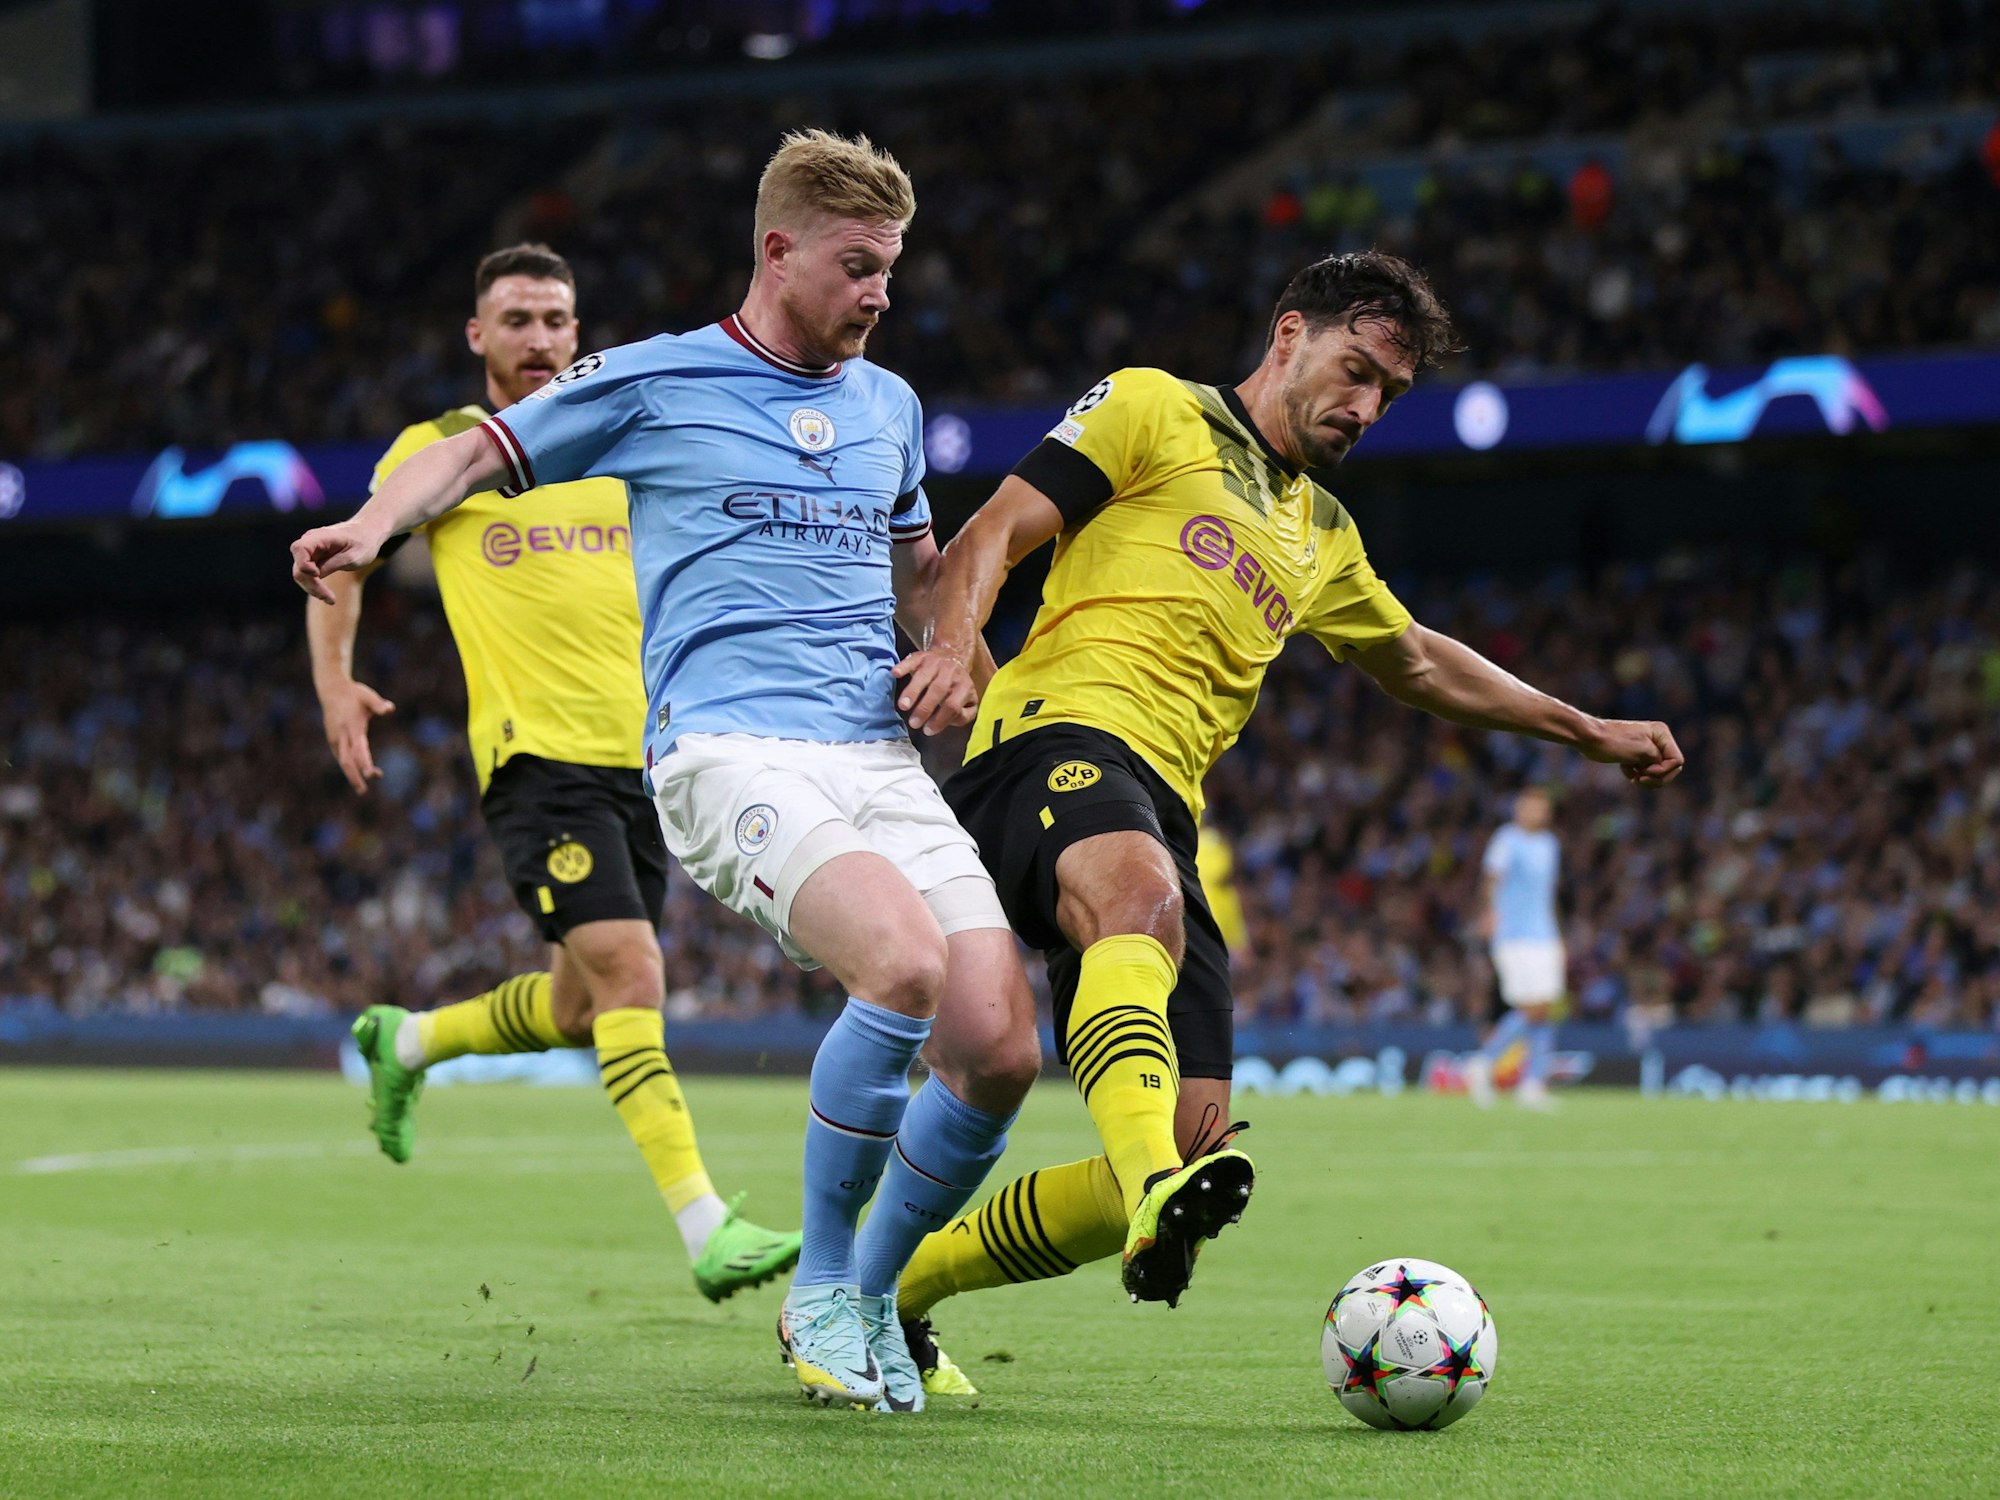 Kevin De Bruyne von Manchester City kämpft mit Mats Hummels vom BVB um den Ball.